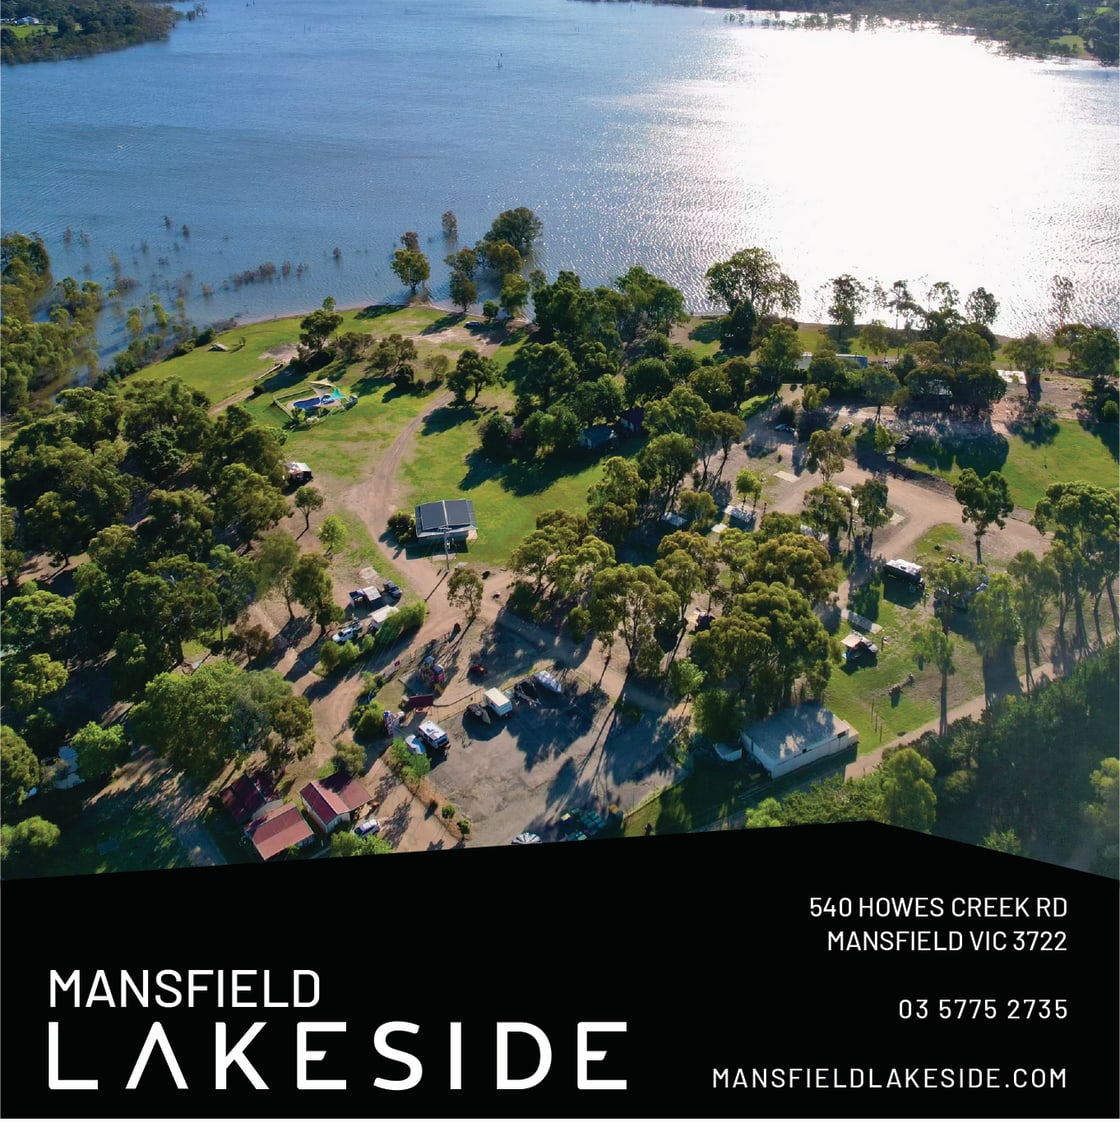 Lakeside Mansfield